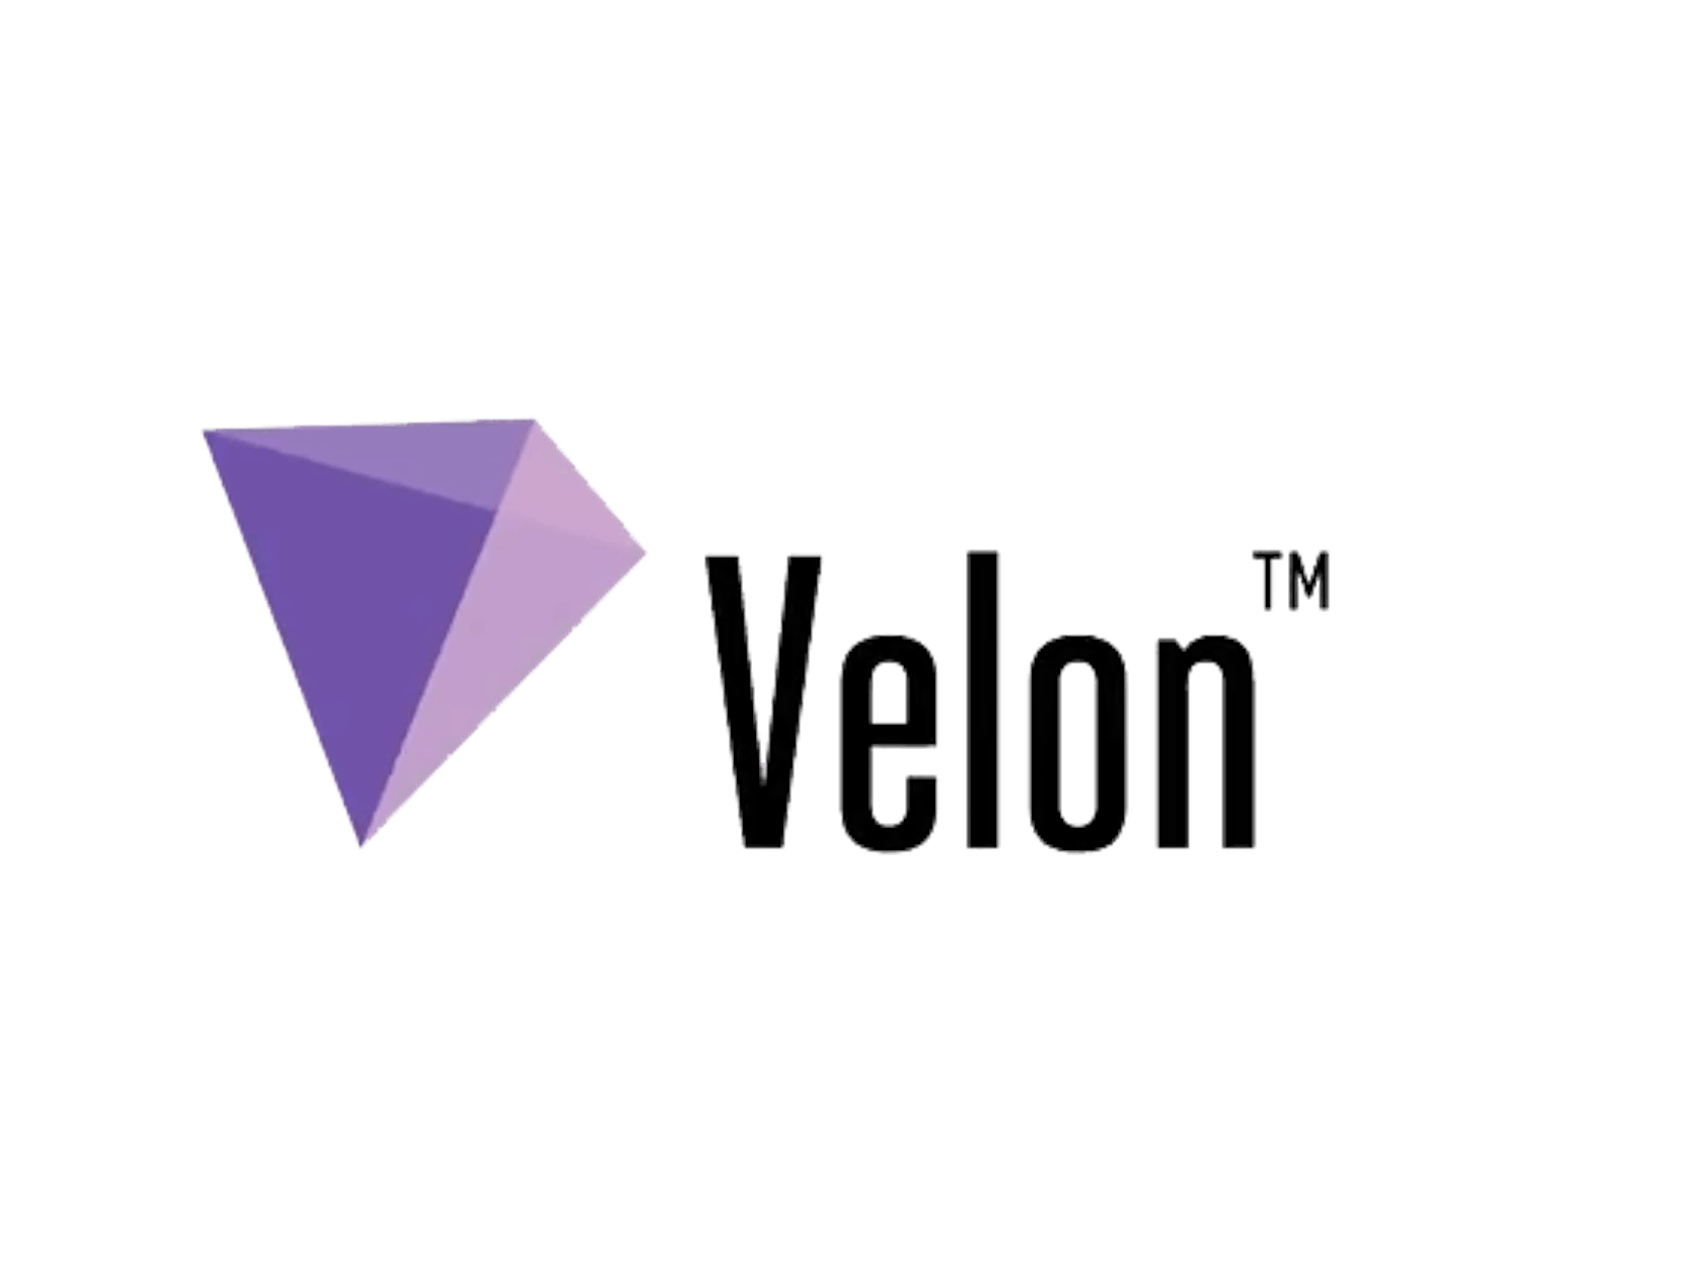 Top pro cycling teams create Web3 fan universe — Velon